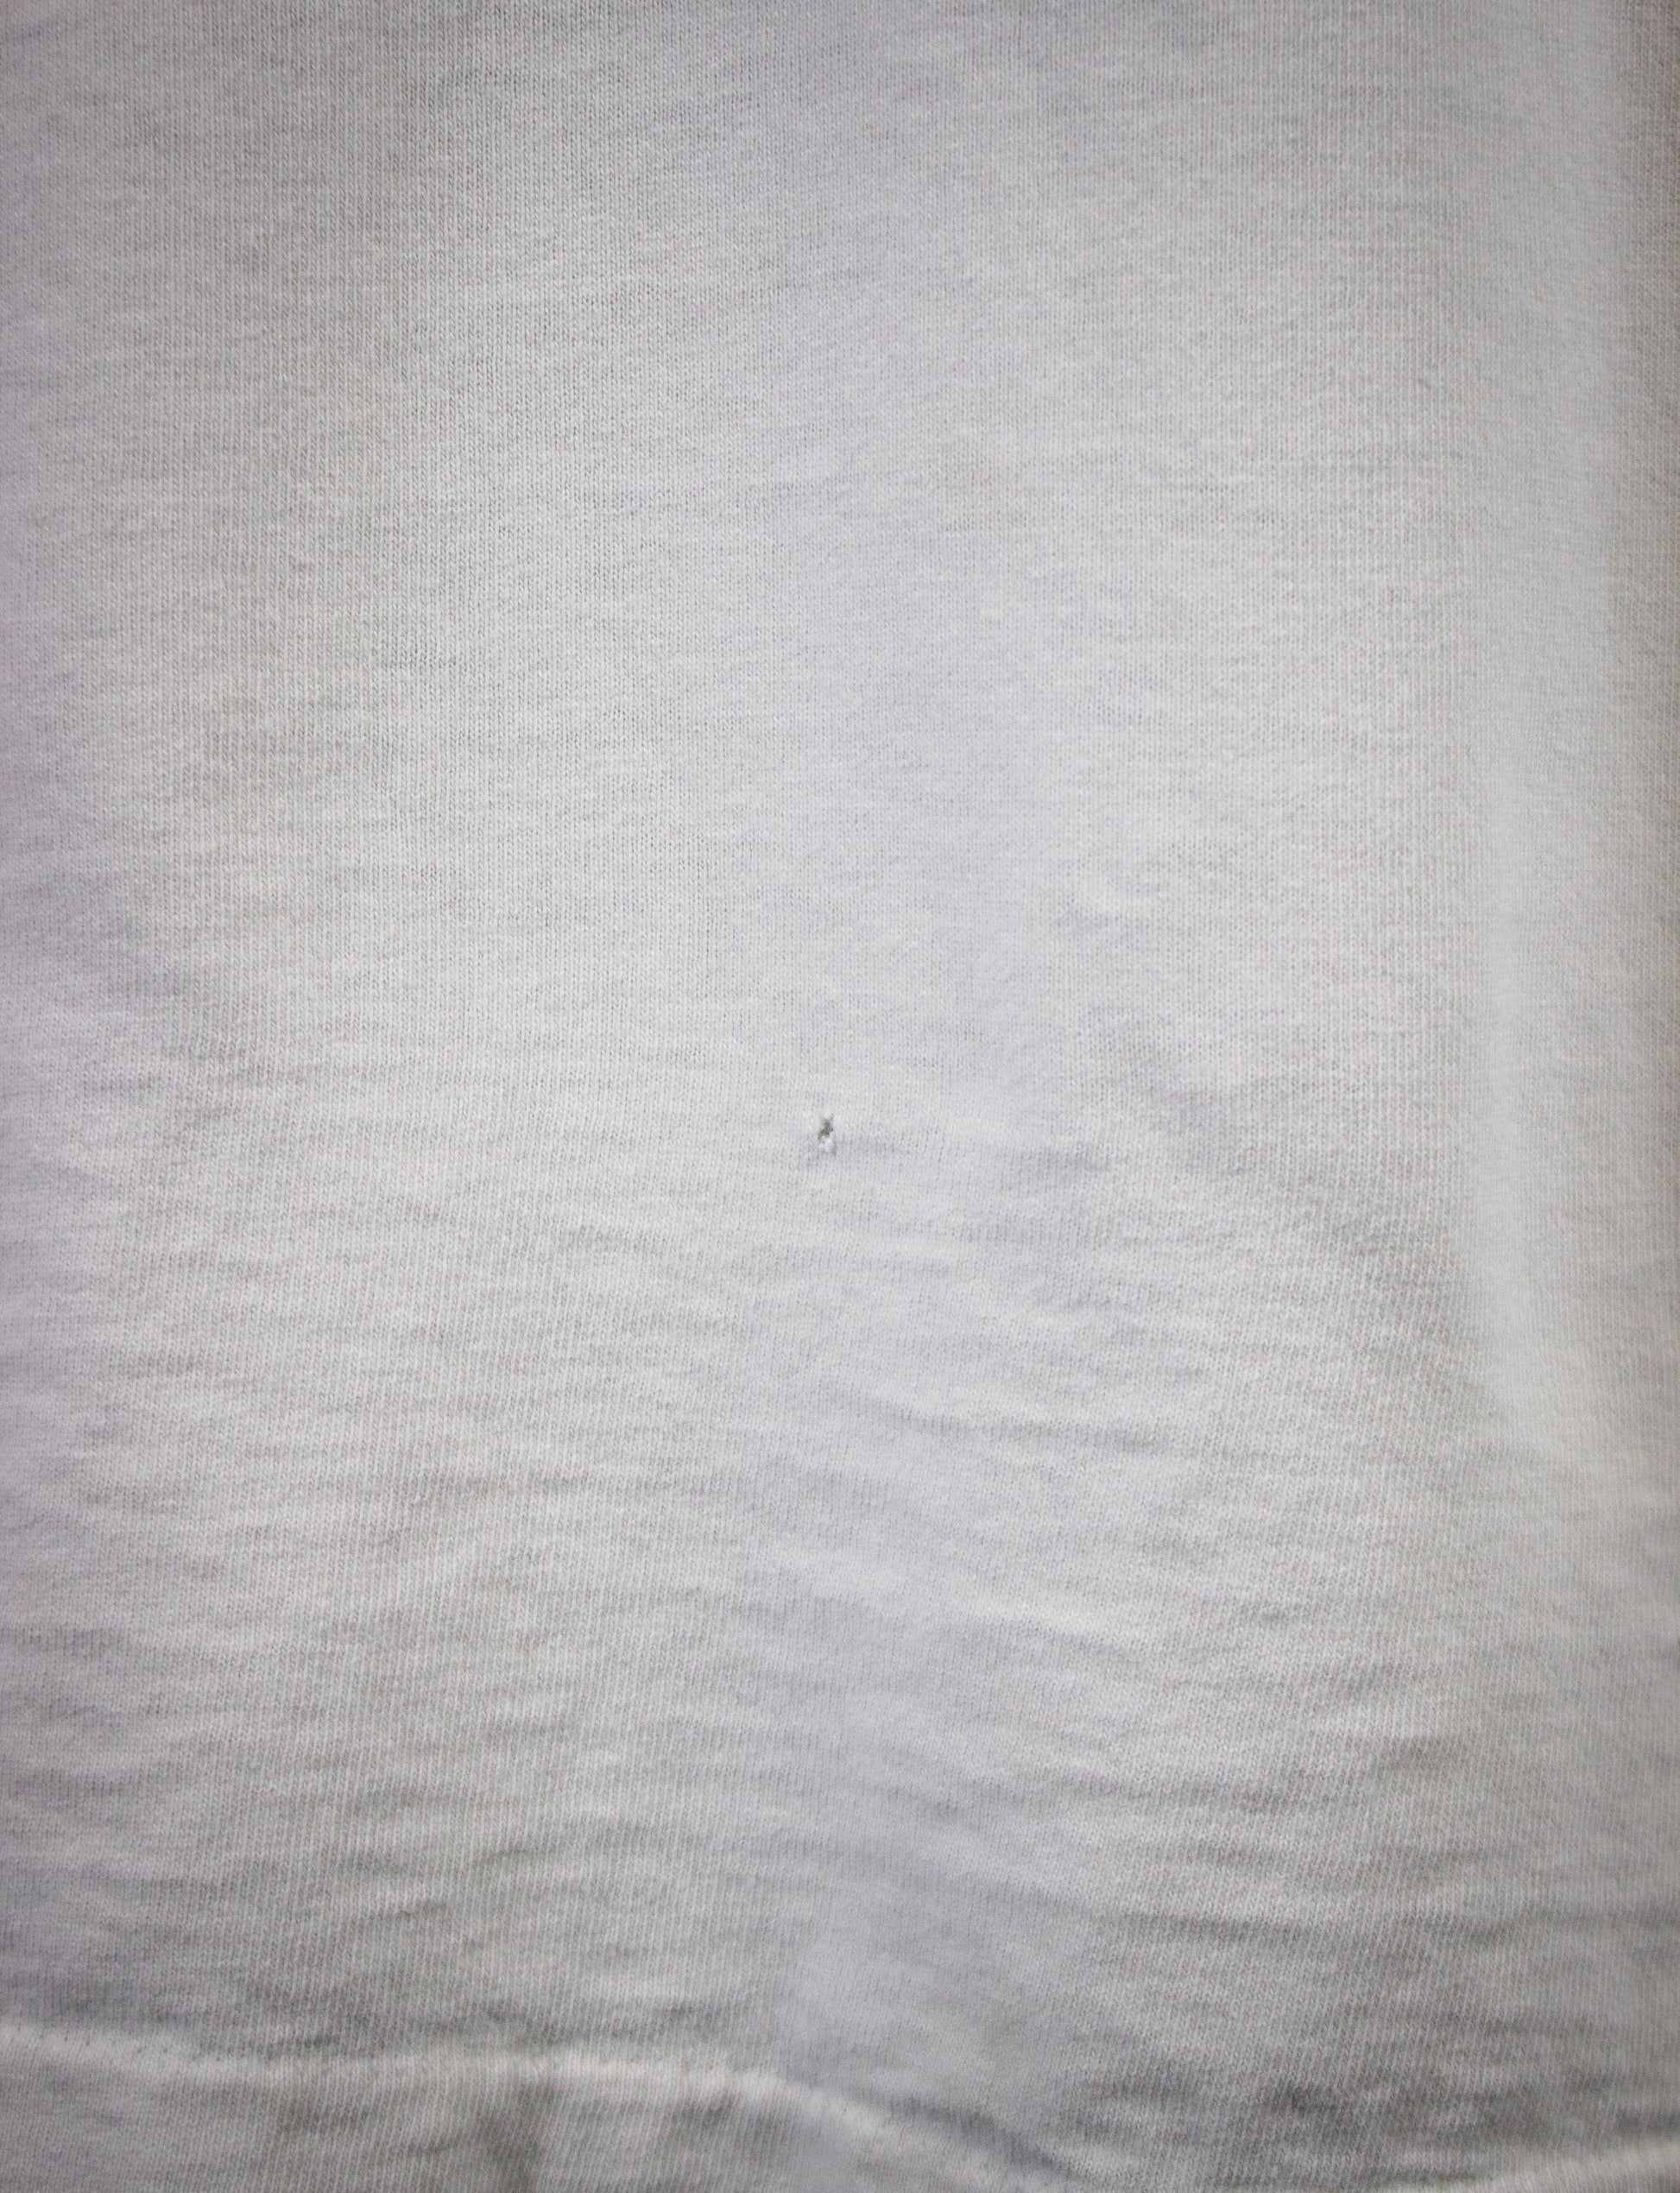 Vintage Beach Boys My 409 Concert T Shirt 1994 White XL